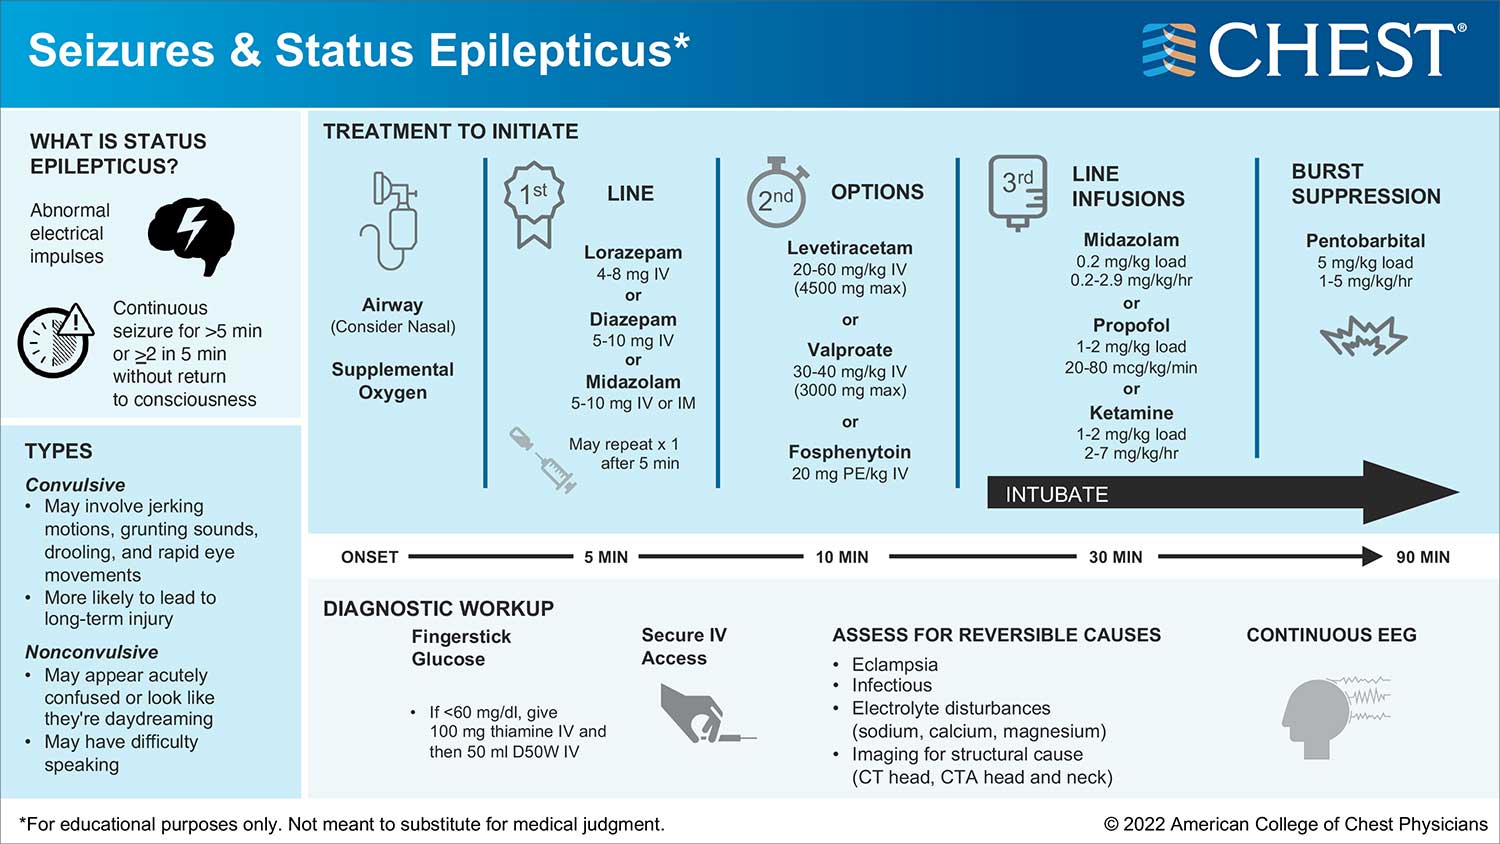 Seizures and Status Epilepticus infographic